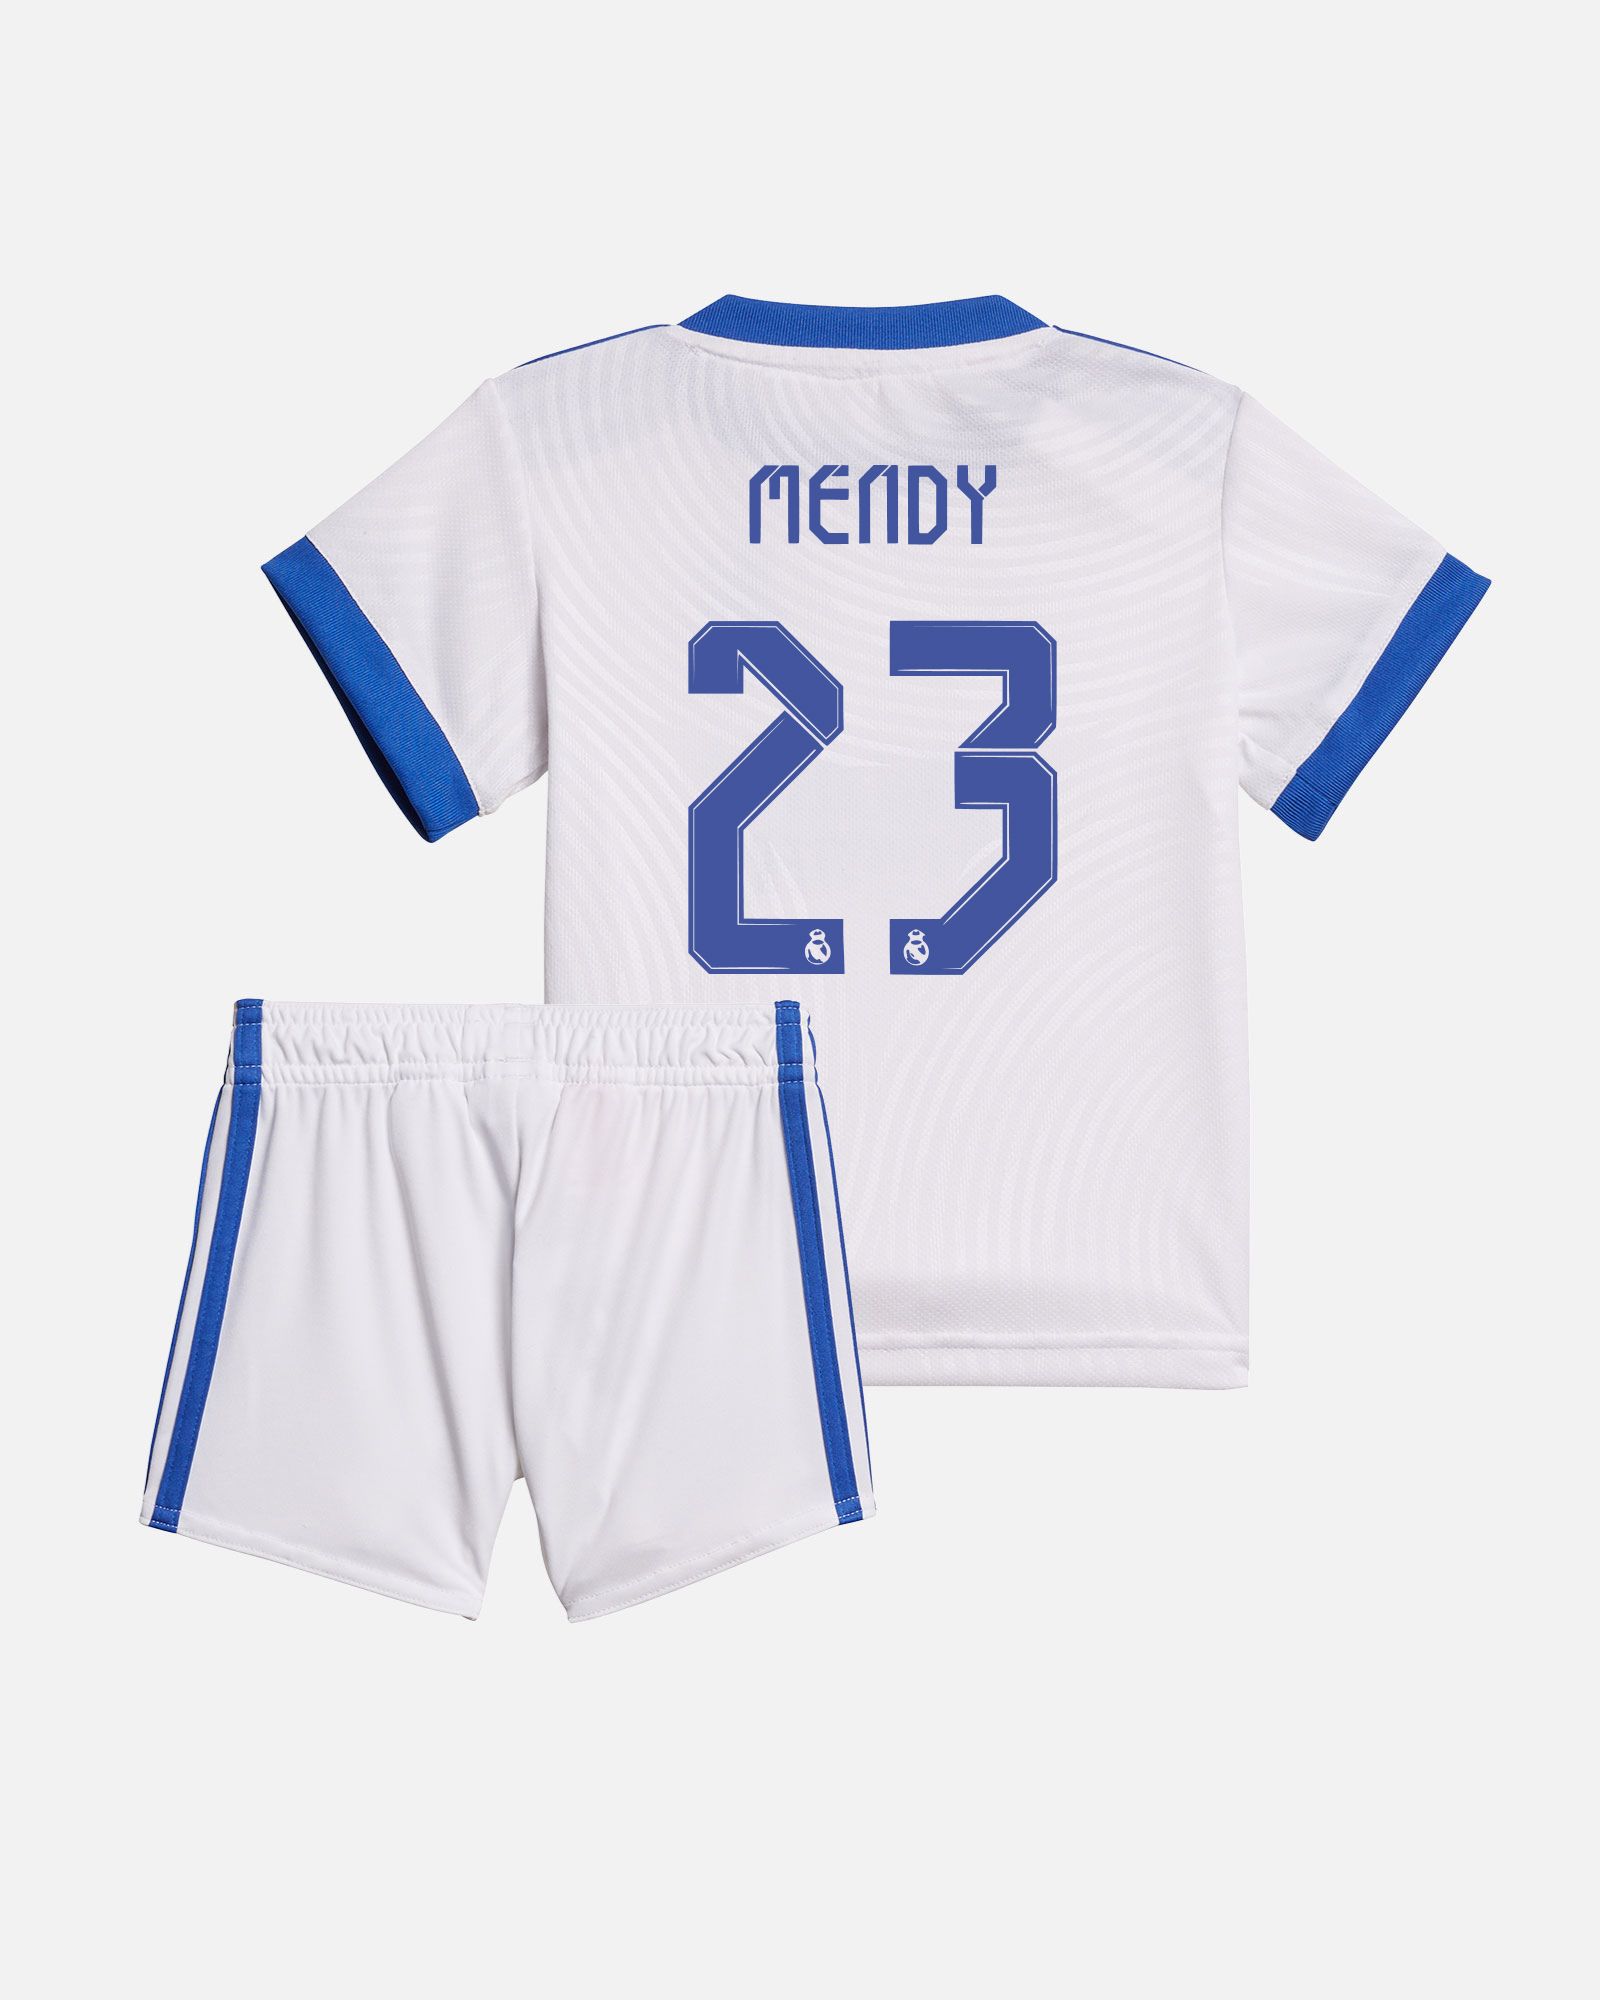 Miniconjunto 1ª Real Madrid 2021/2022 Mendy - Fútbol Factory